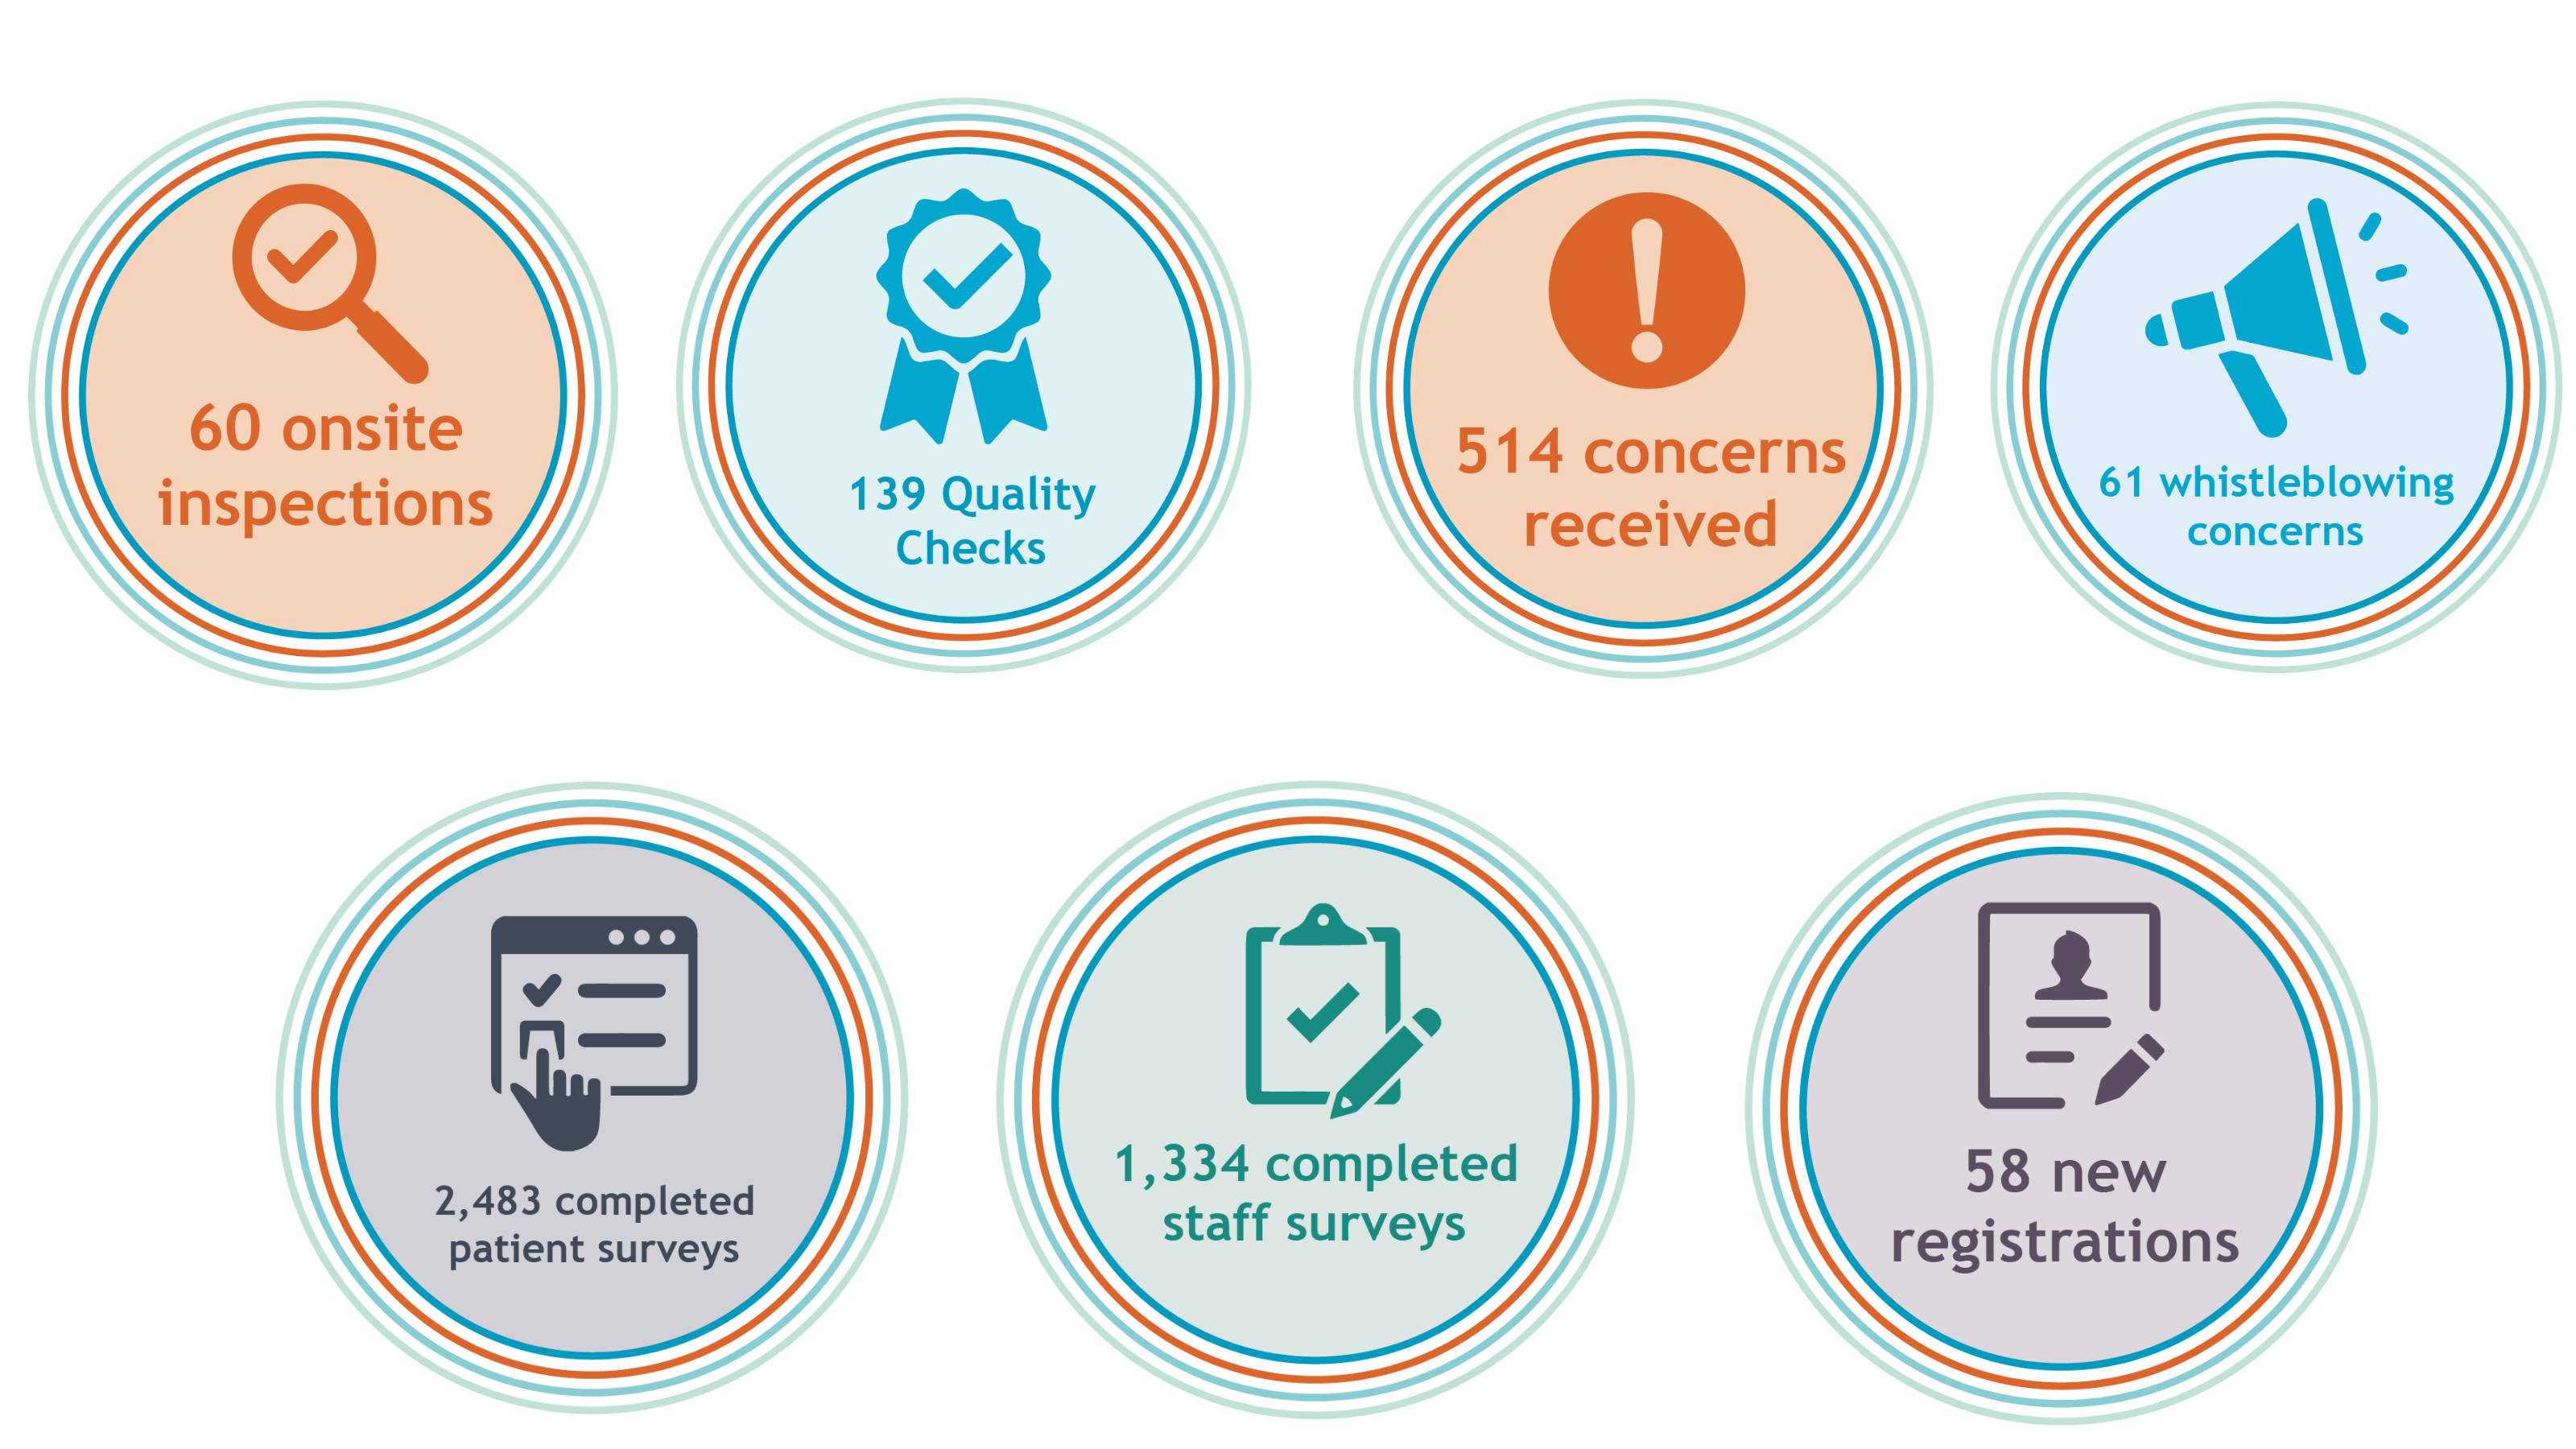 60 onsite inspections, 139 Quality Checks, 2,483 patient surveys, 514 concerns received, 58 new registrations, 1,334 staff surveys, 61 whistleblowing concerns